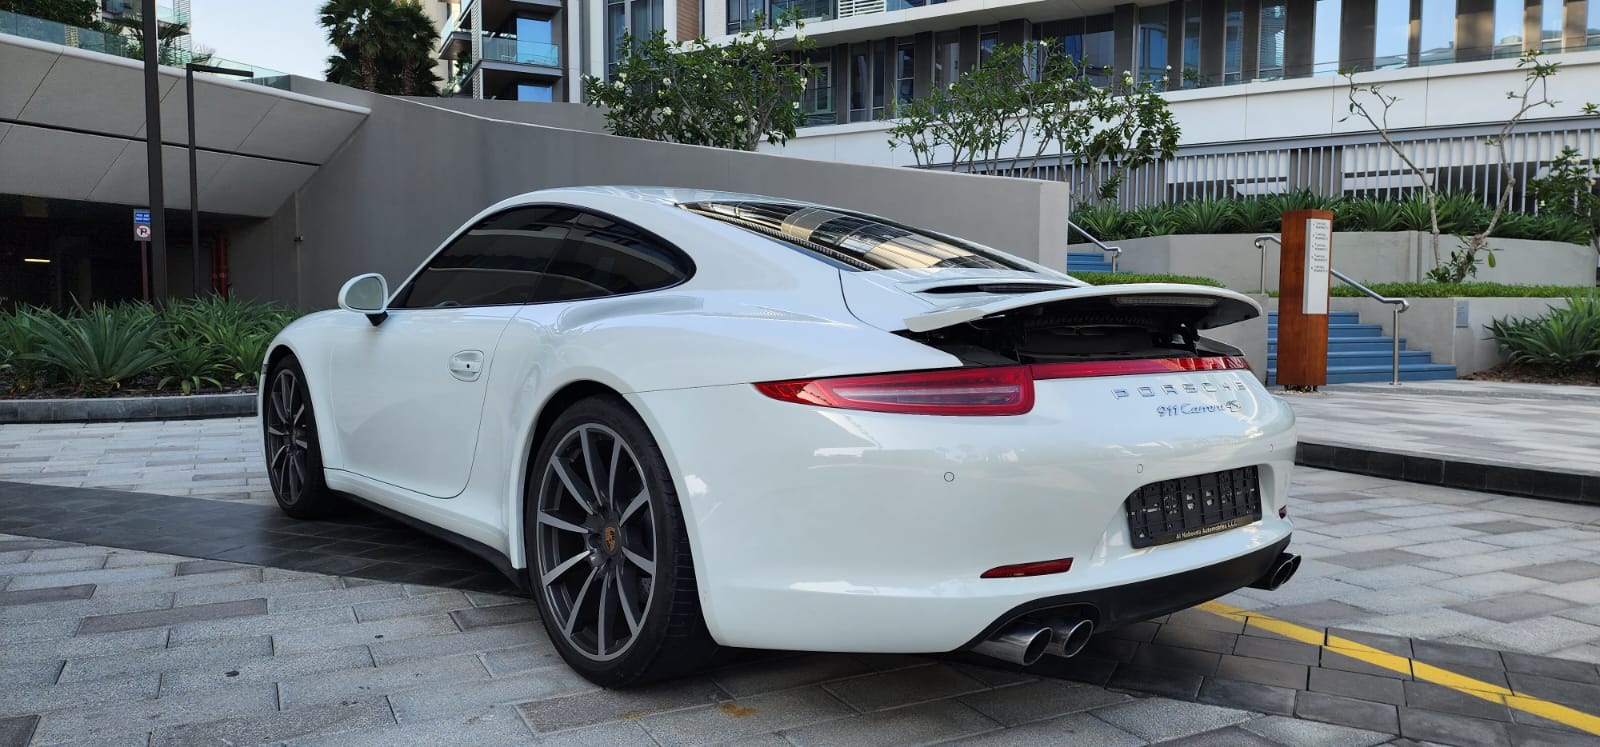 Porsche Carrera 4S 2014